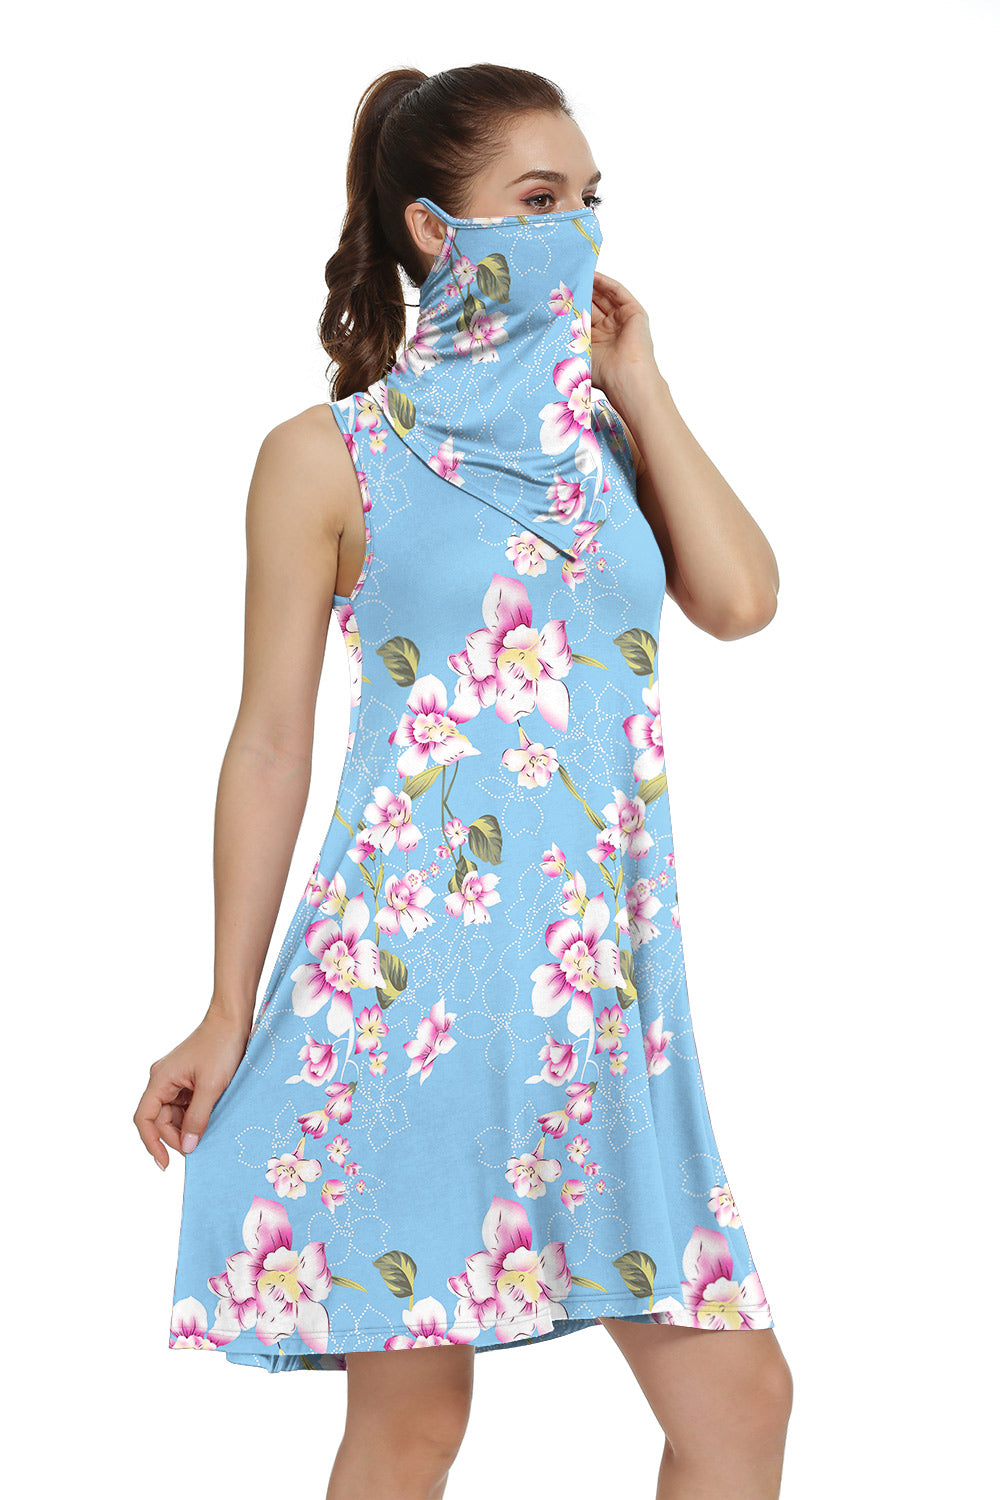 Women's Nightgown Sleeveless Sleepwear Comfy Nightshirt Chemise Sleep Dress